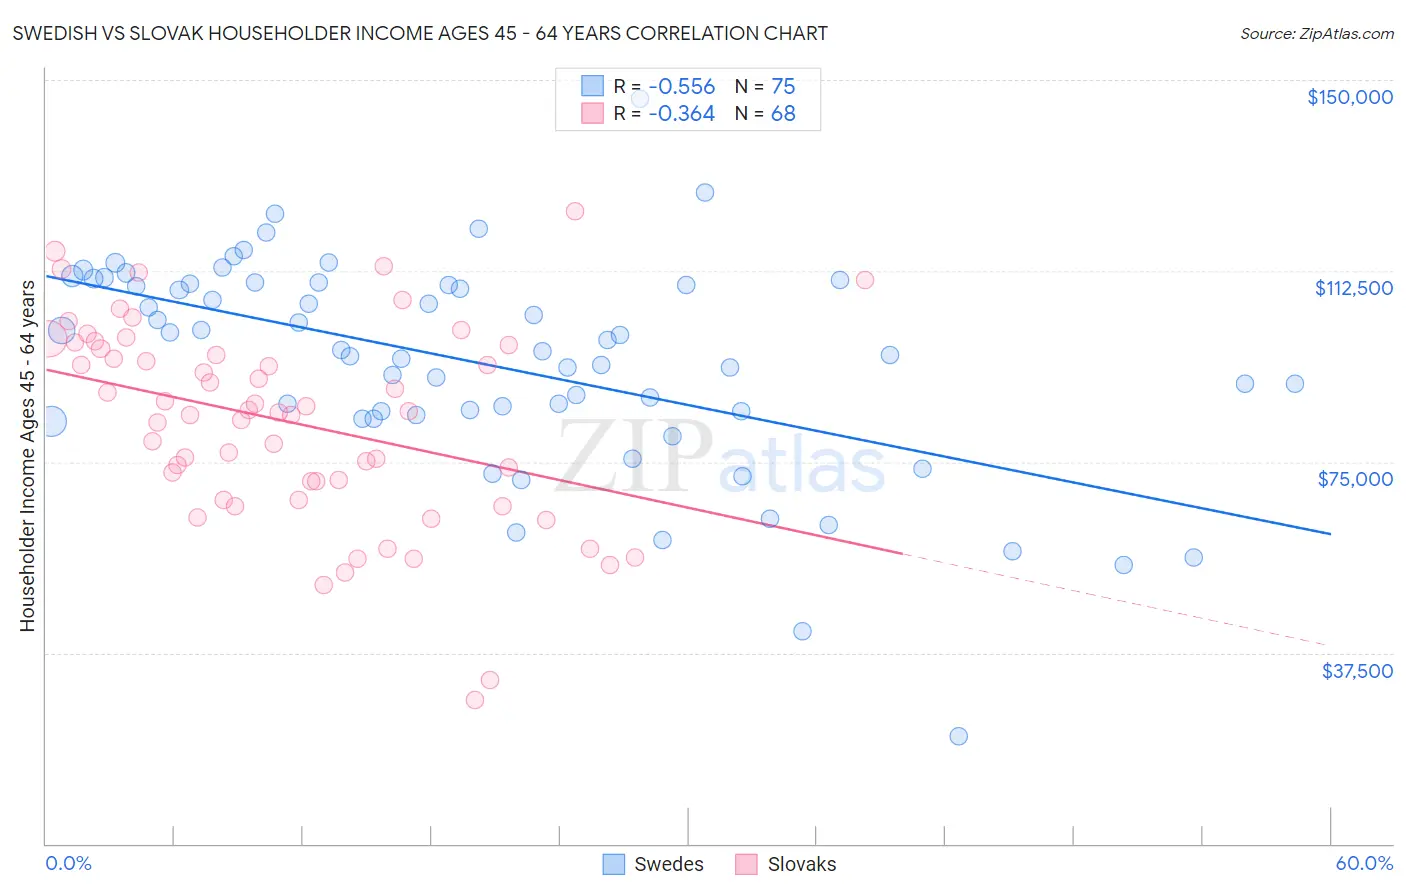 Swedish vs Slovak Householder Income Ages 45 - 64 years